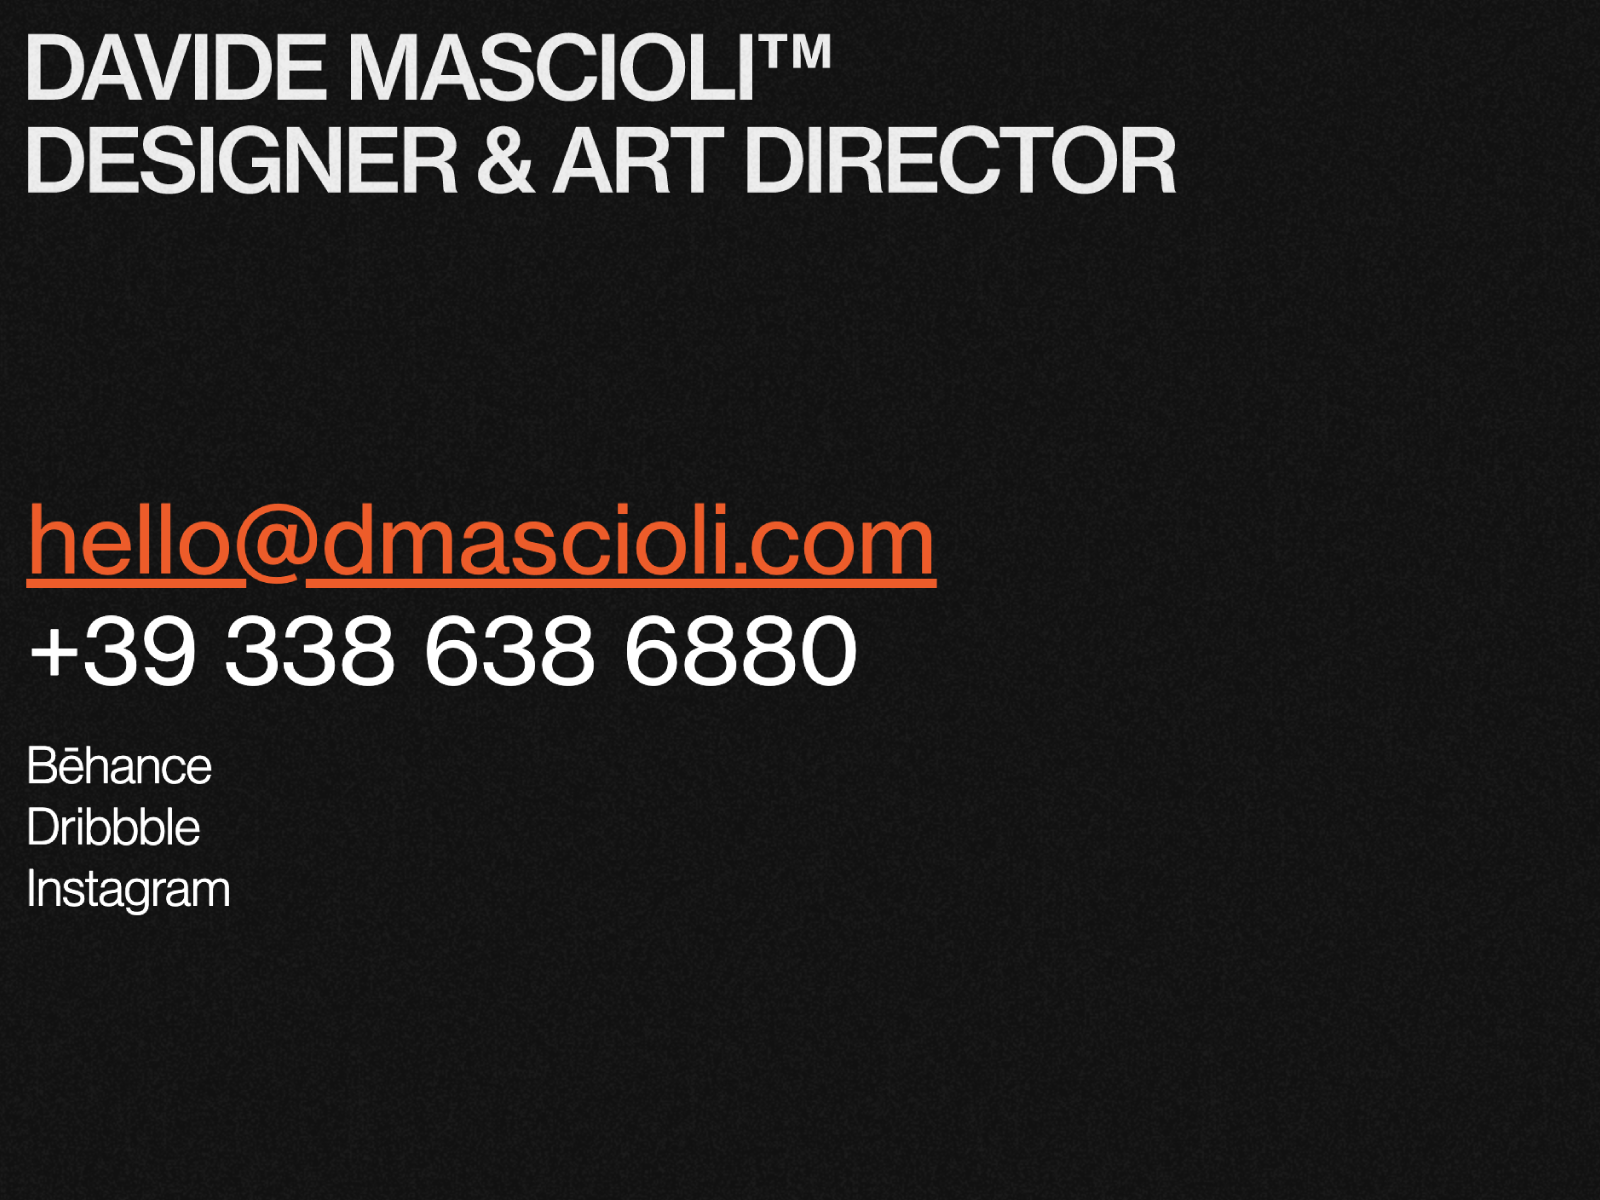 Davide Mascioli | Designer & Art Director | Contact